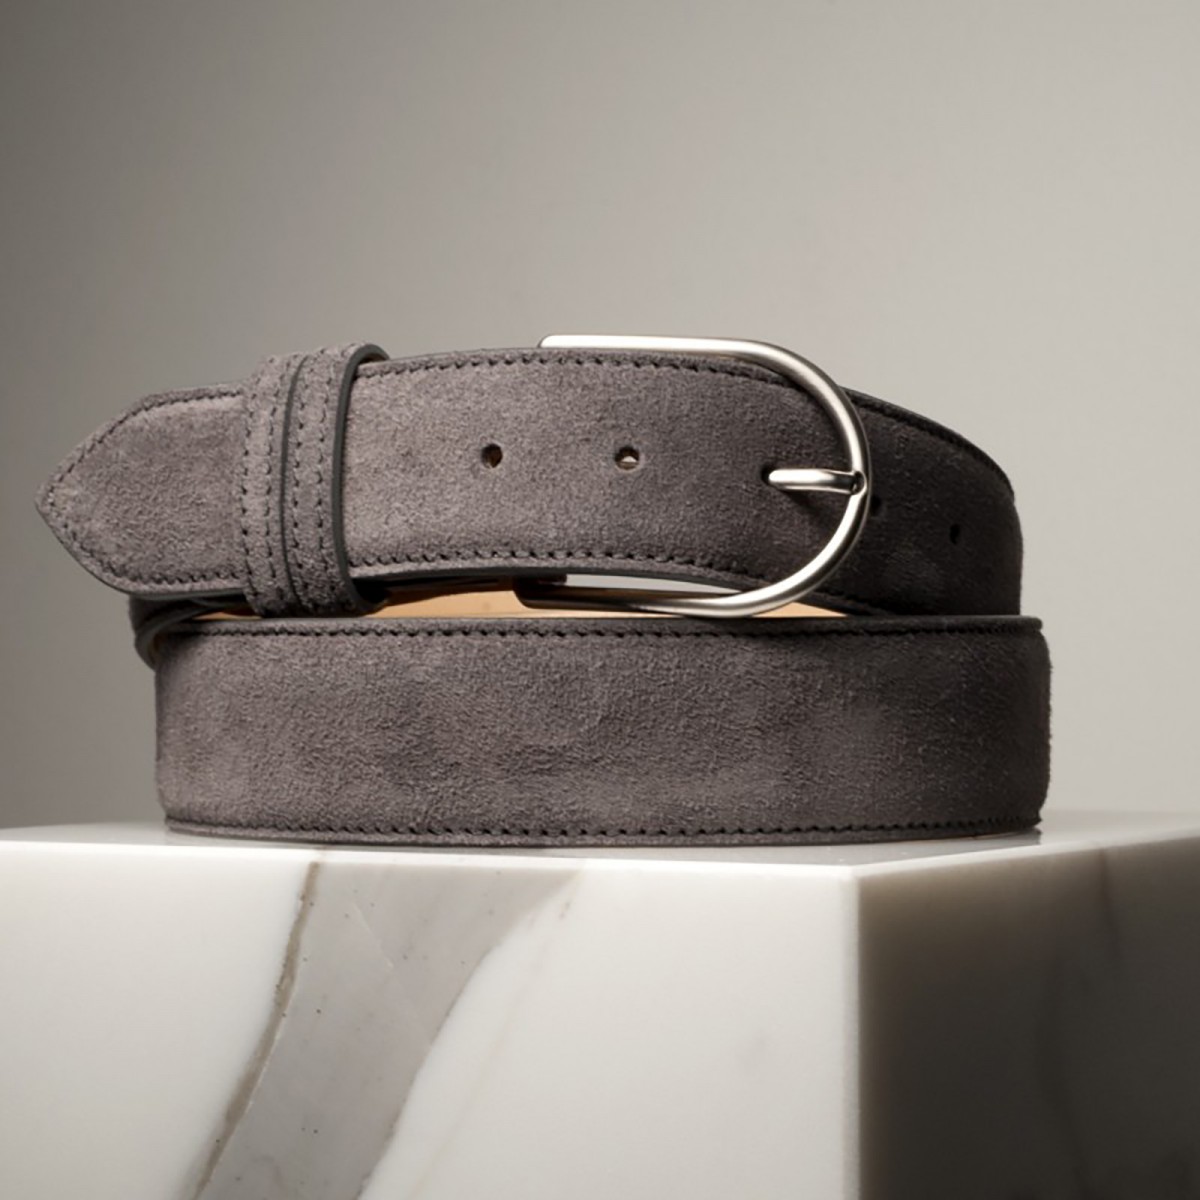 NUBUCK CALFSKIN - Leather belt, handmade in Italy